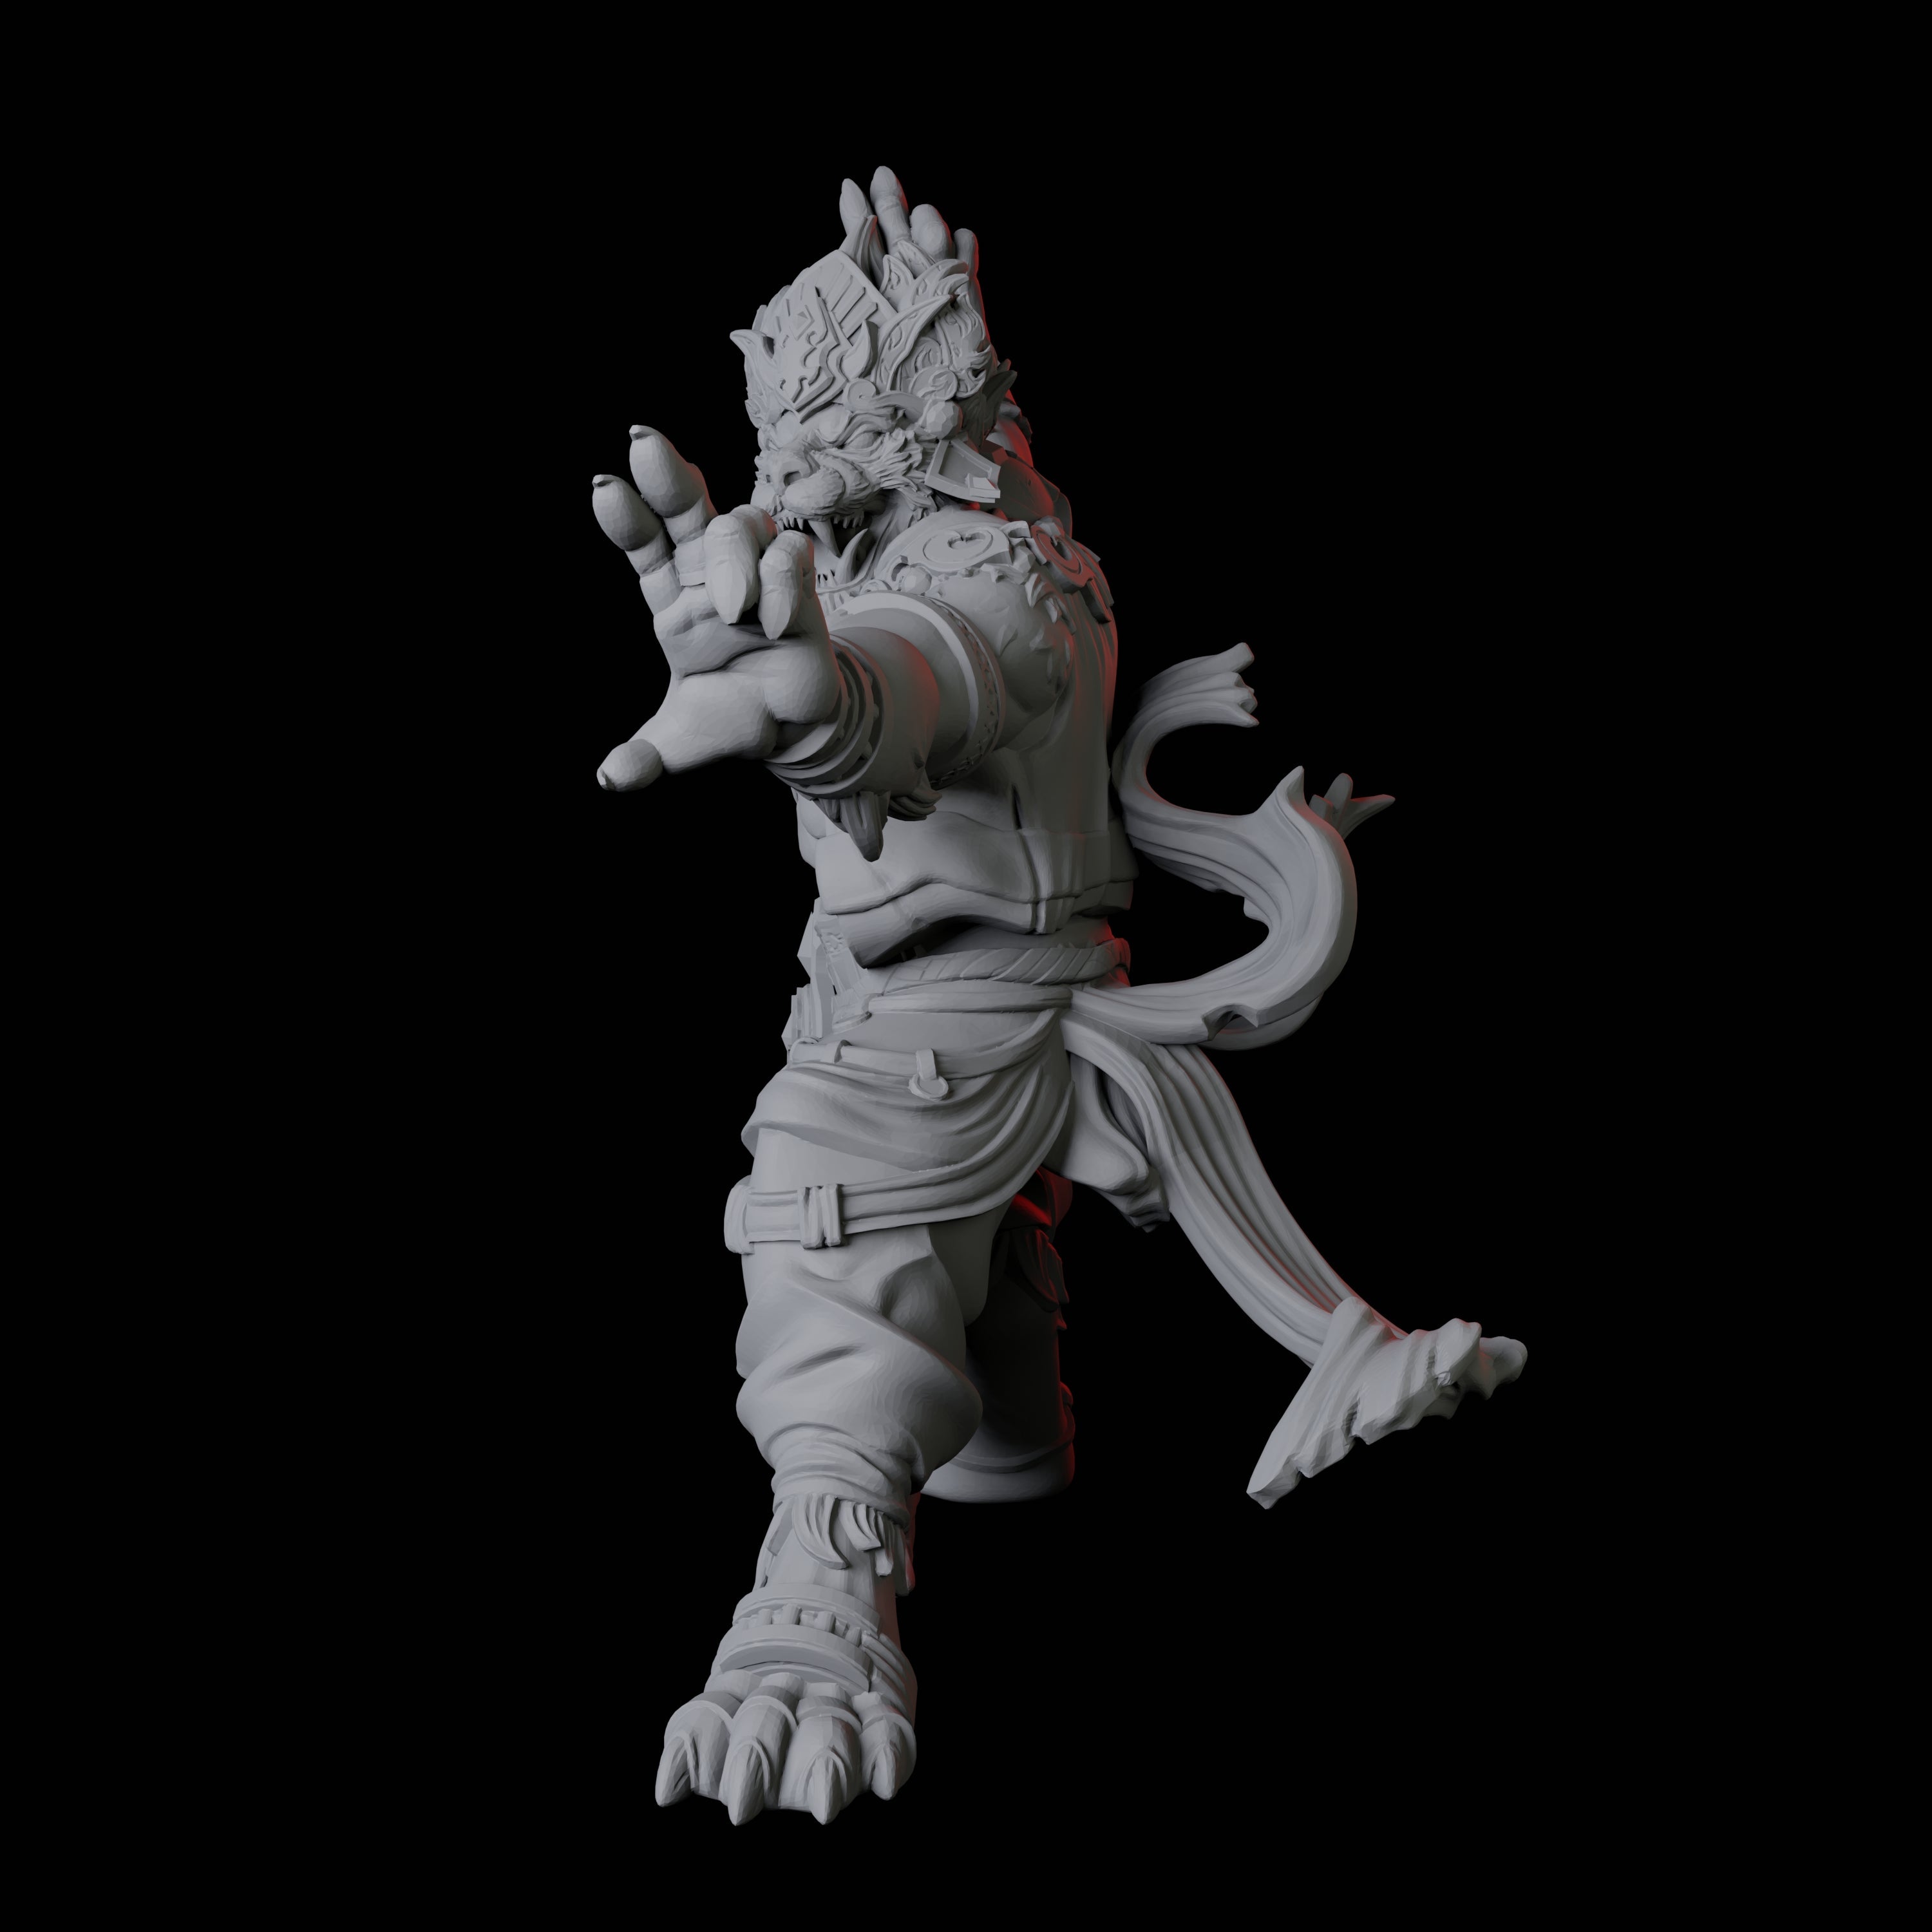 Rakshasa Sanskrit Demon Miniature for Dungeons and Dragons, Pathfinder or other TTRPGs